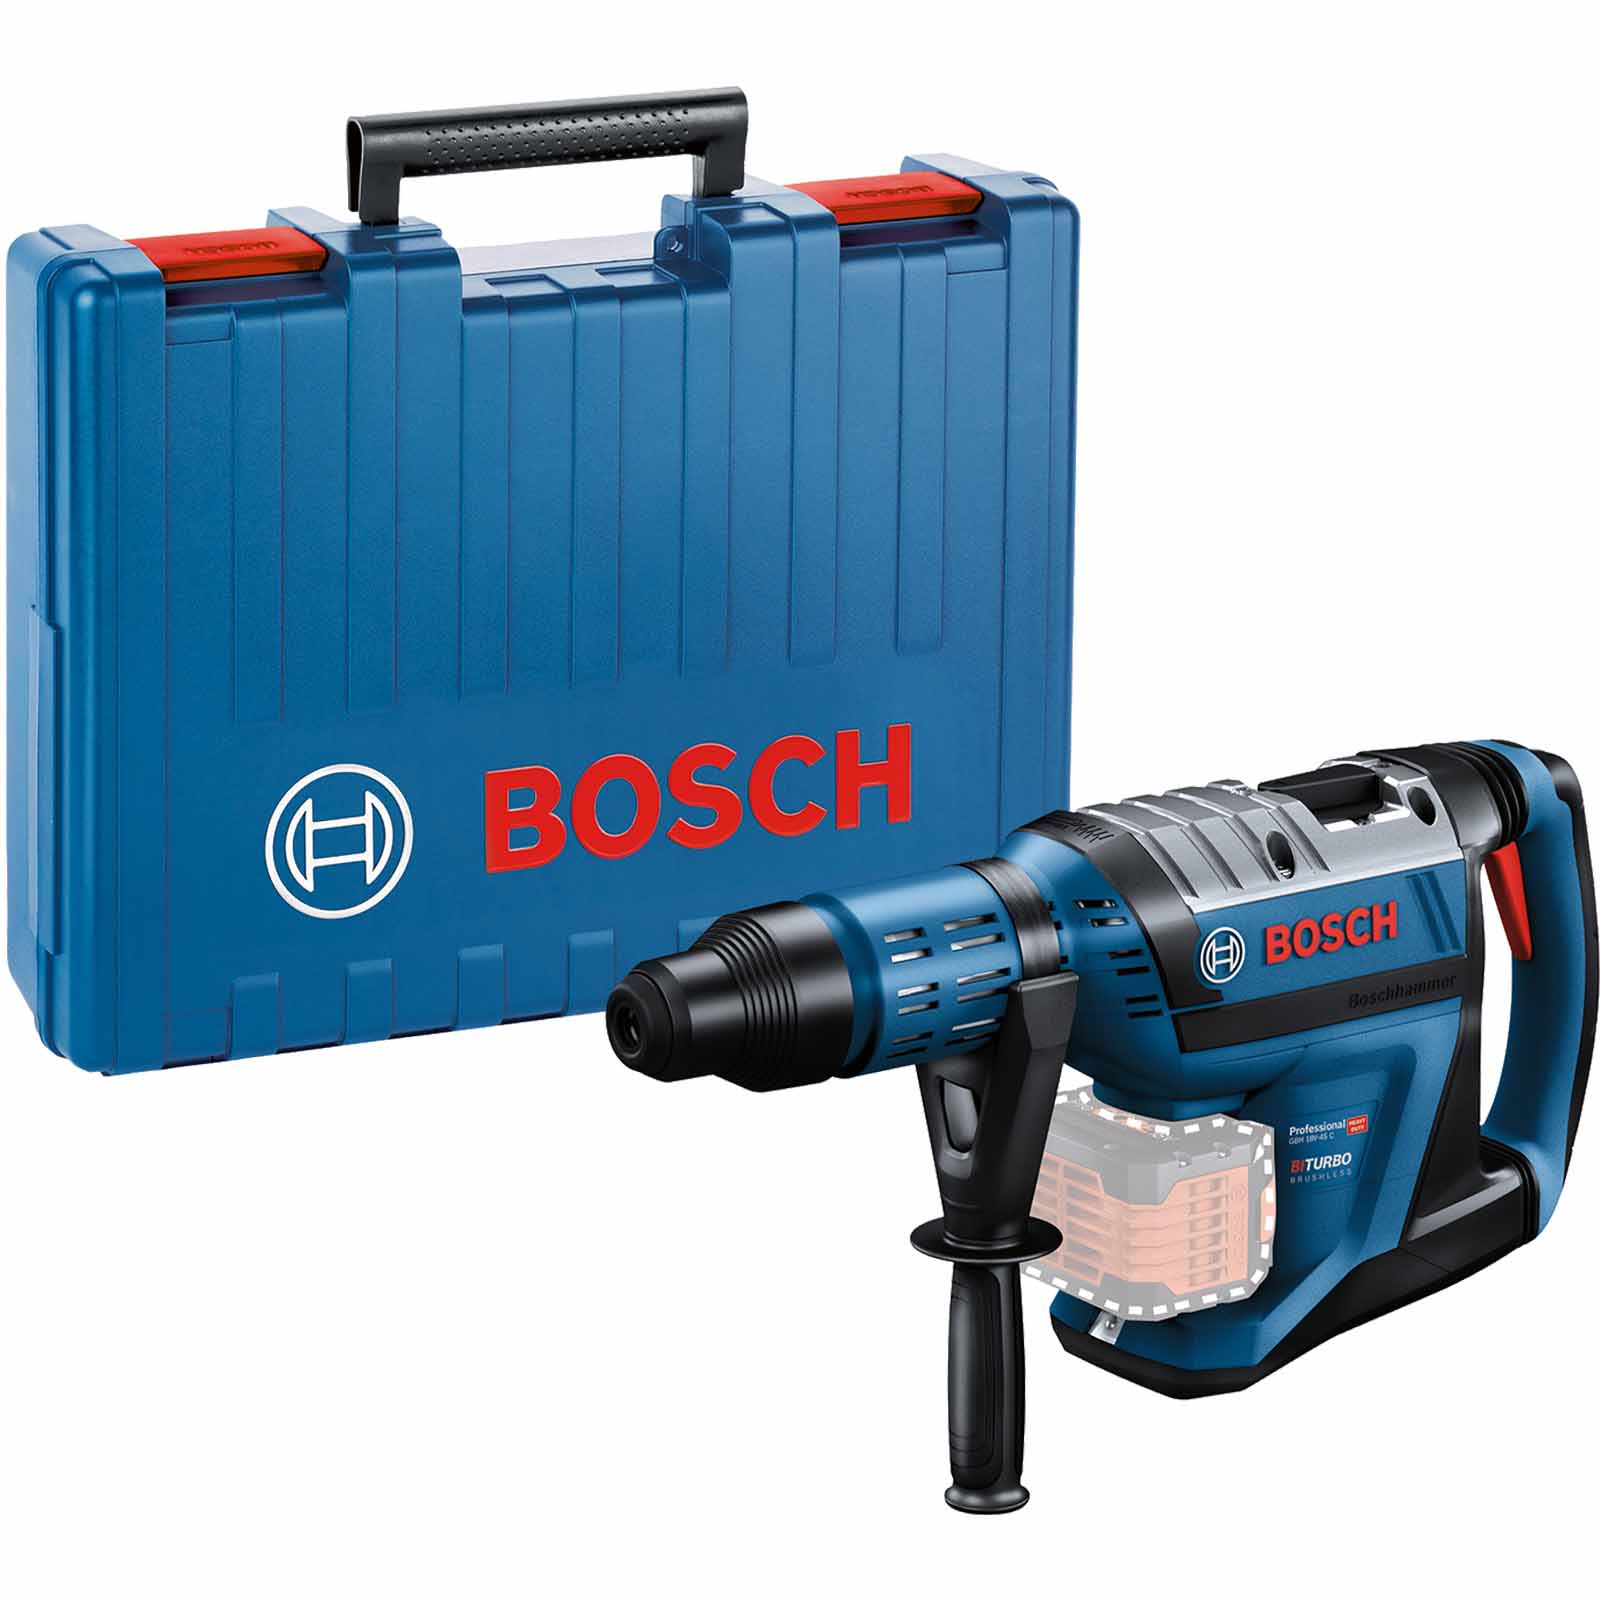 Bosch GBH 18V-45 C BITURBO 18v Cordless SDS Max Rotary Hammer Drill No Batteries No Charger Case